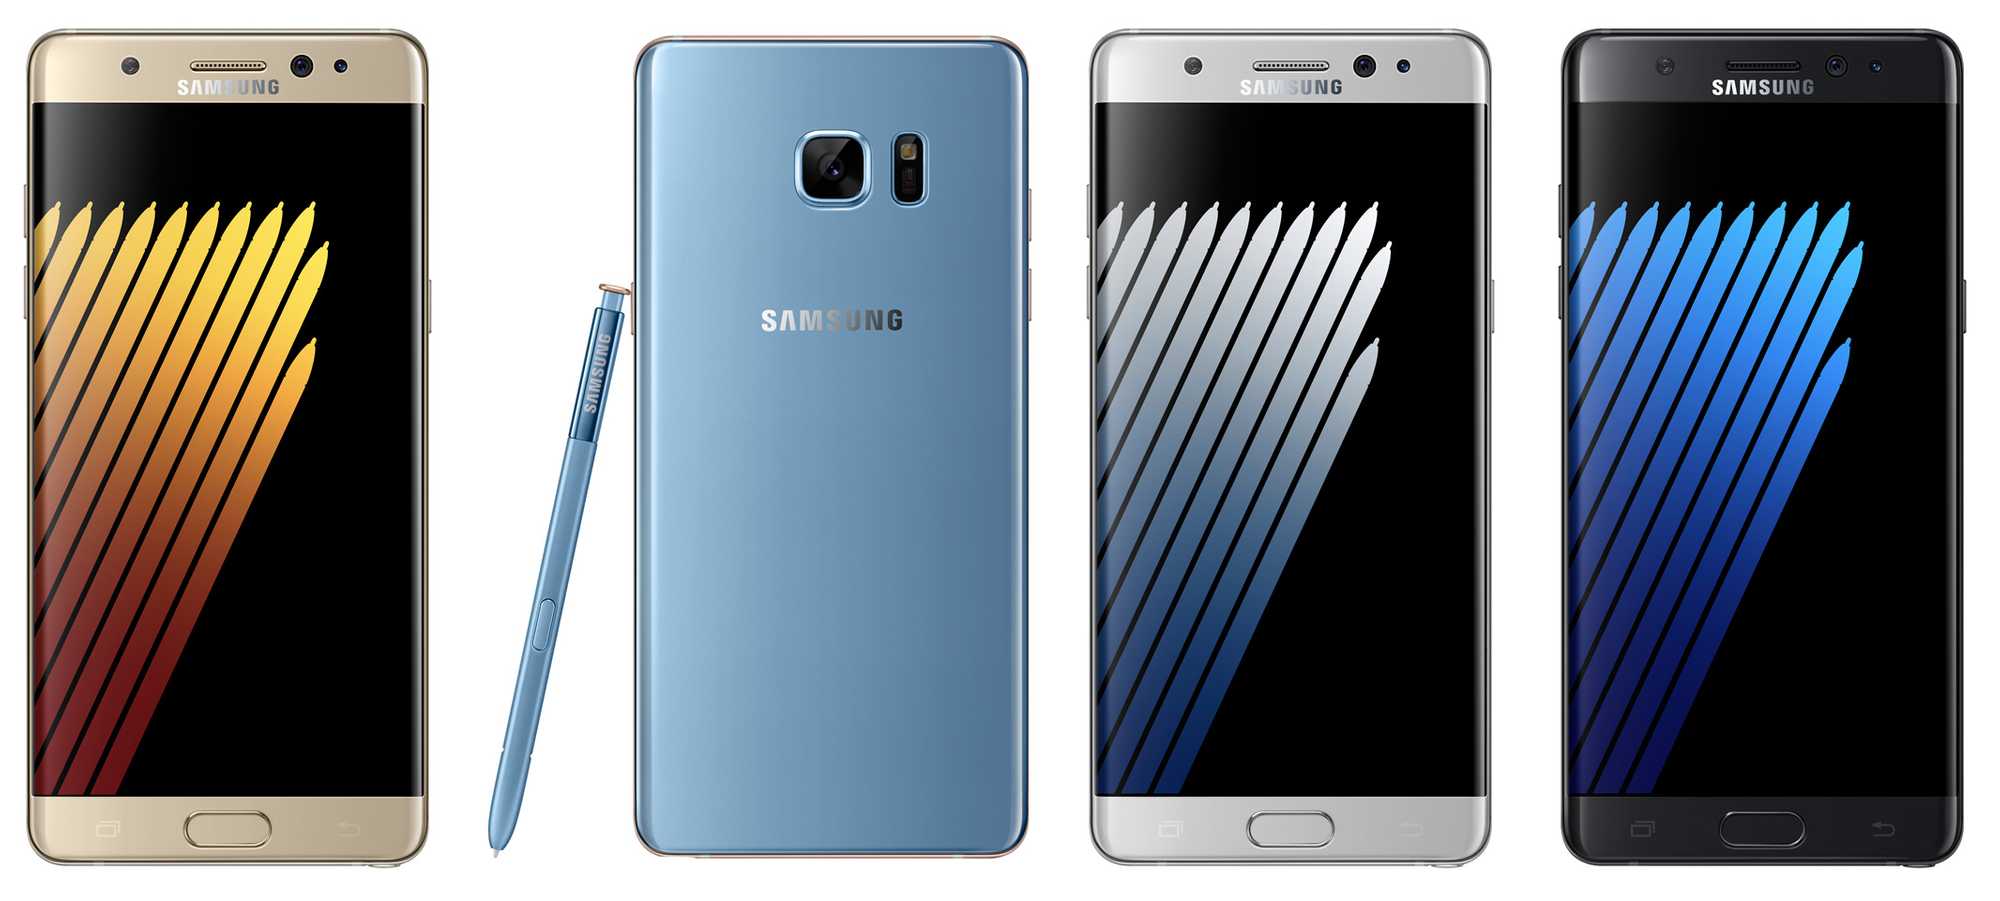 Samsung verzögert Entwicklung des Galaxy S8